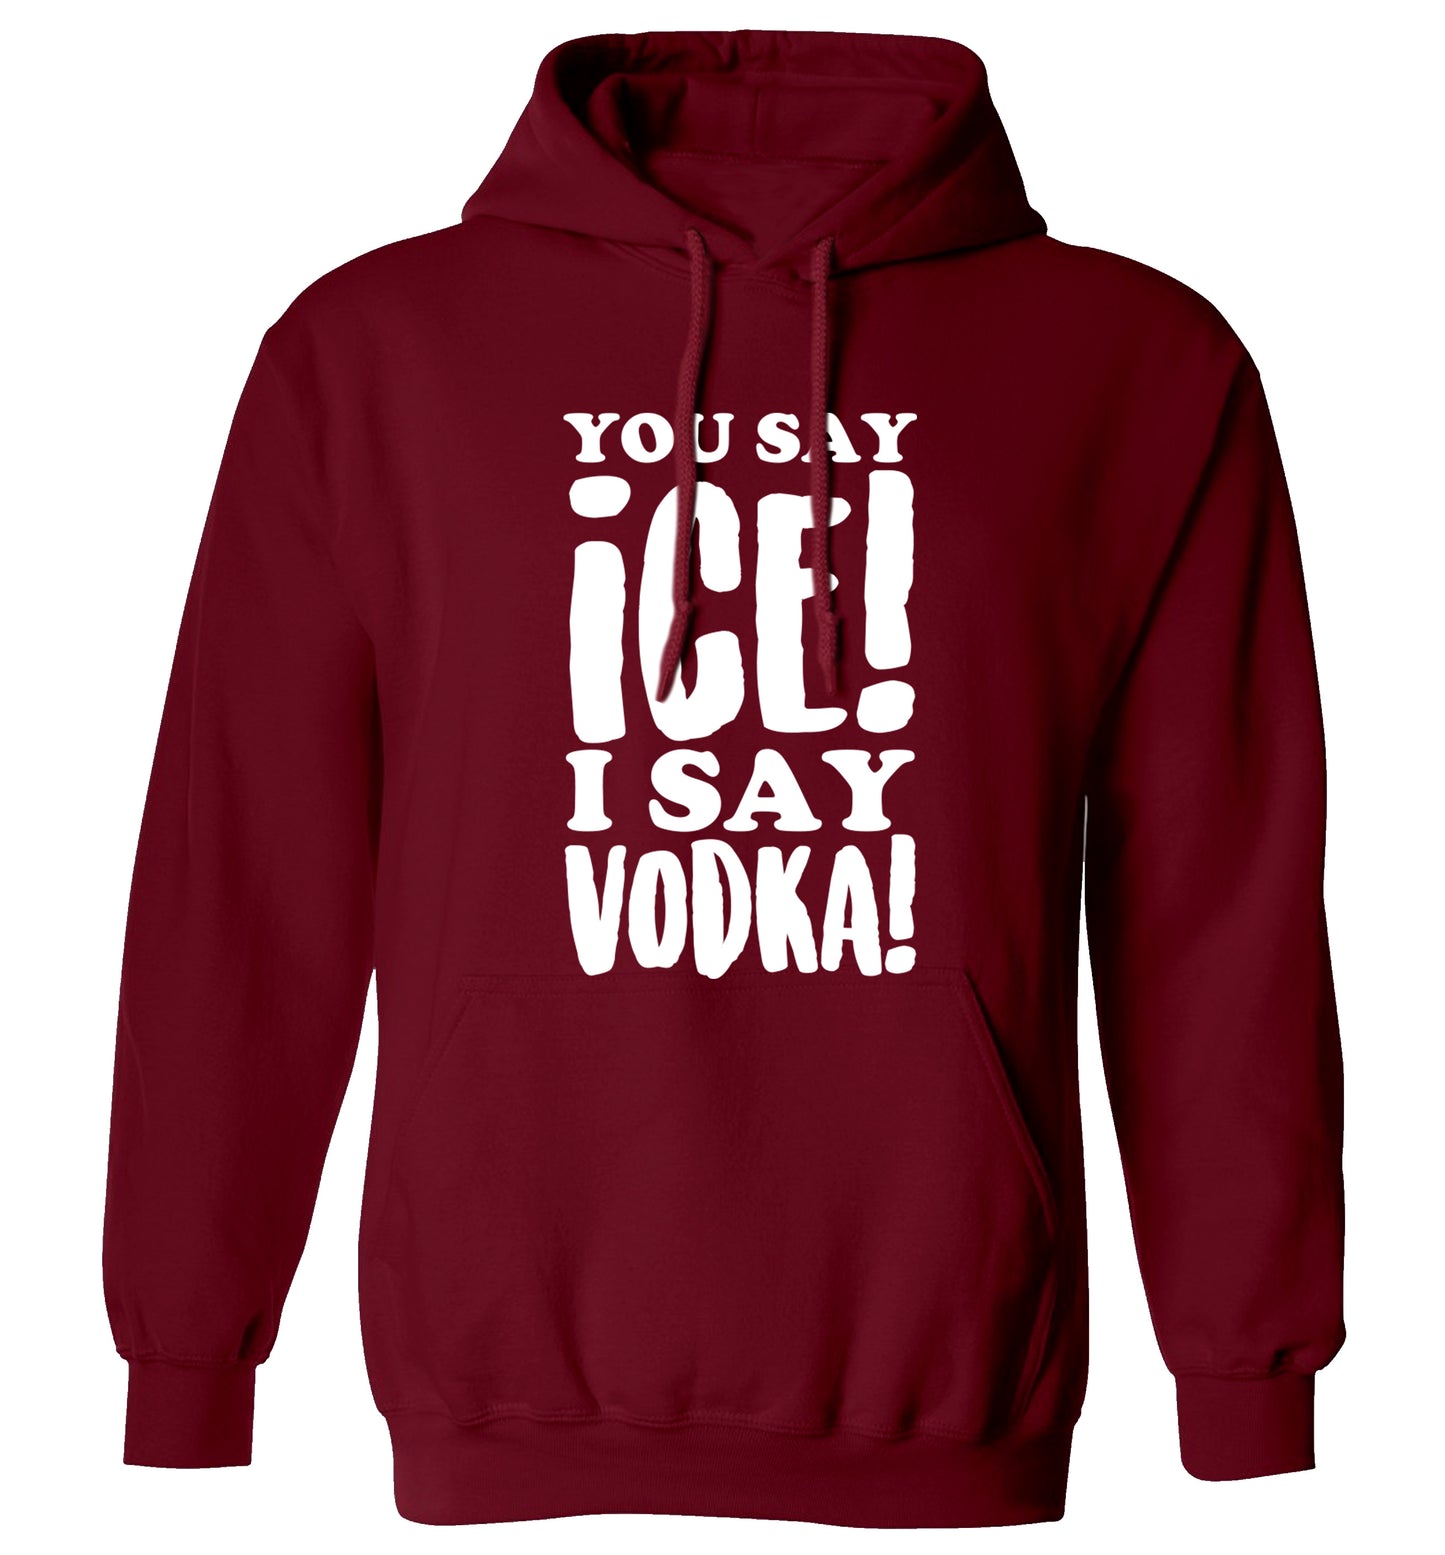 You say ice I say vodka! adults unisex maroon hoodie 2XL